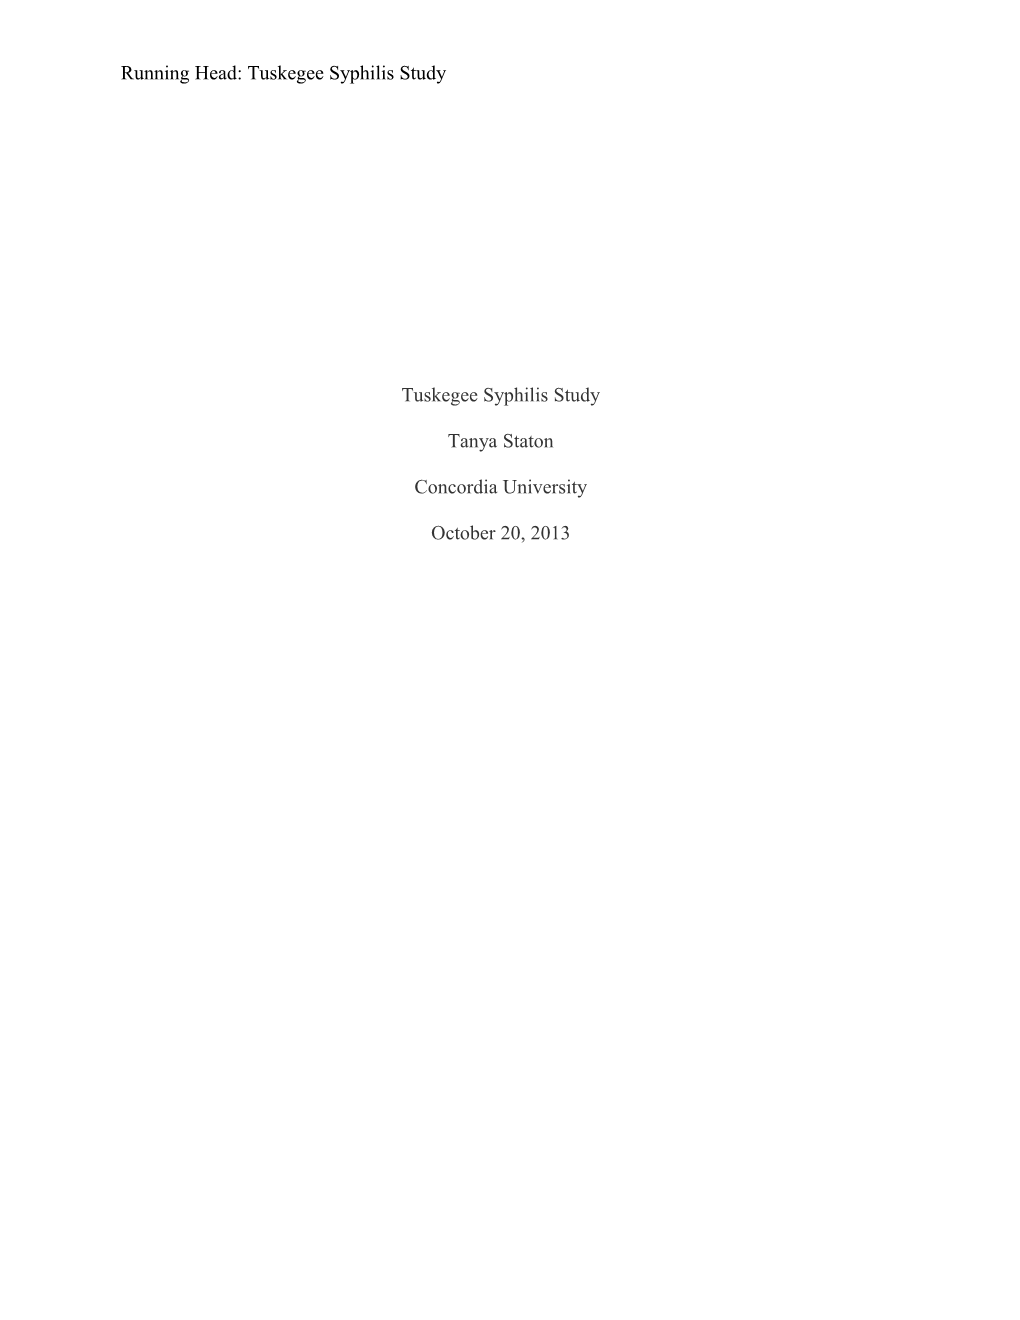 Tuskegee Syphilis Study1